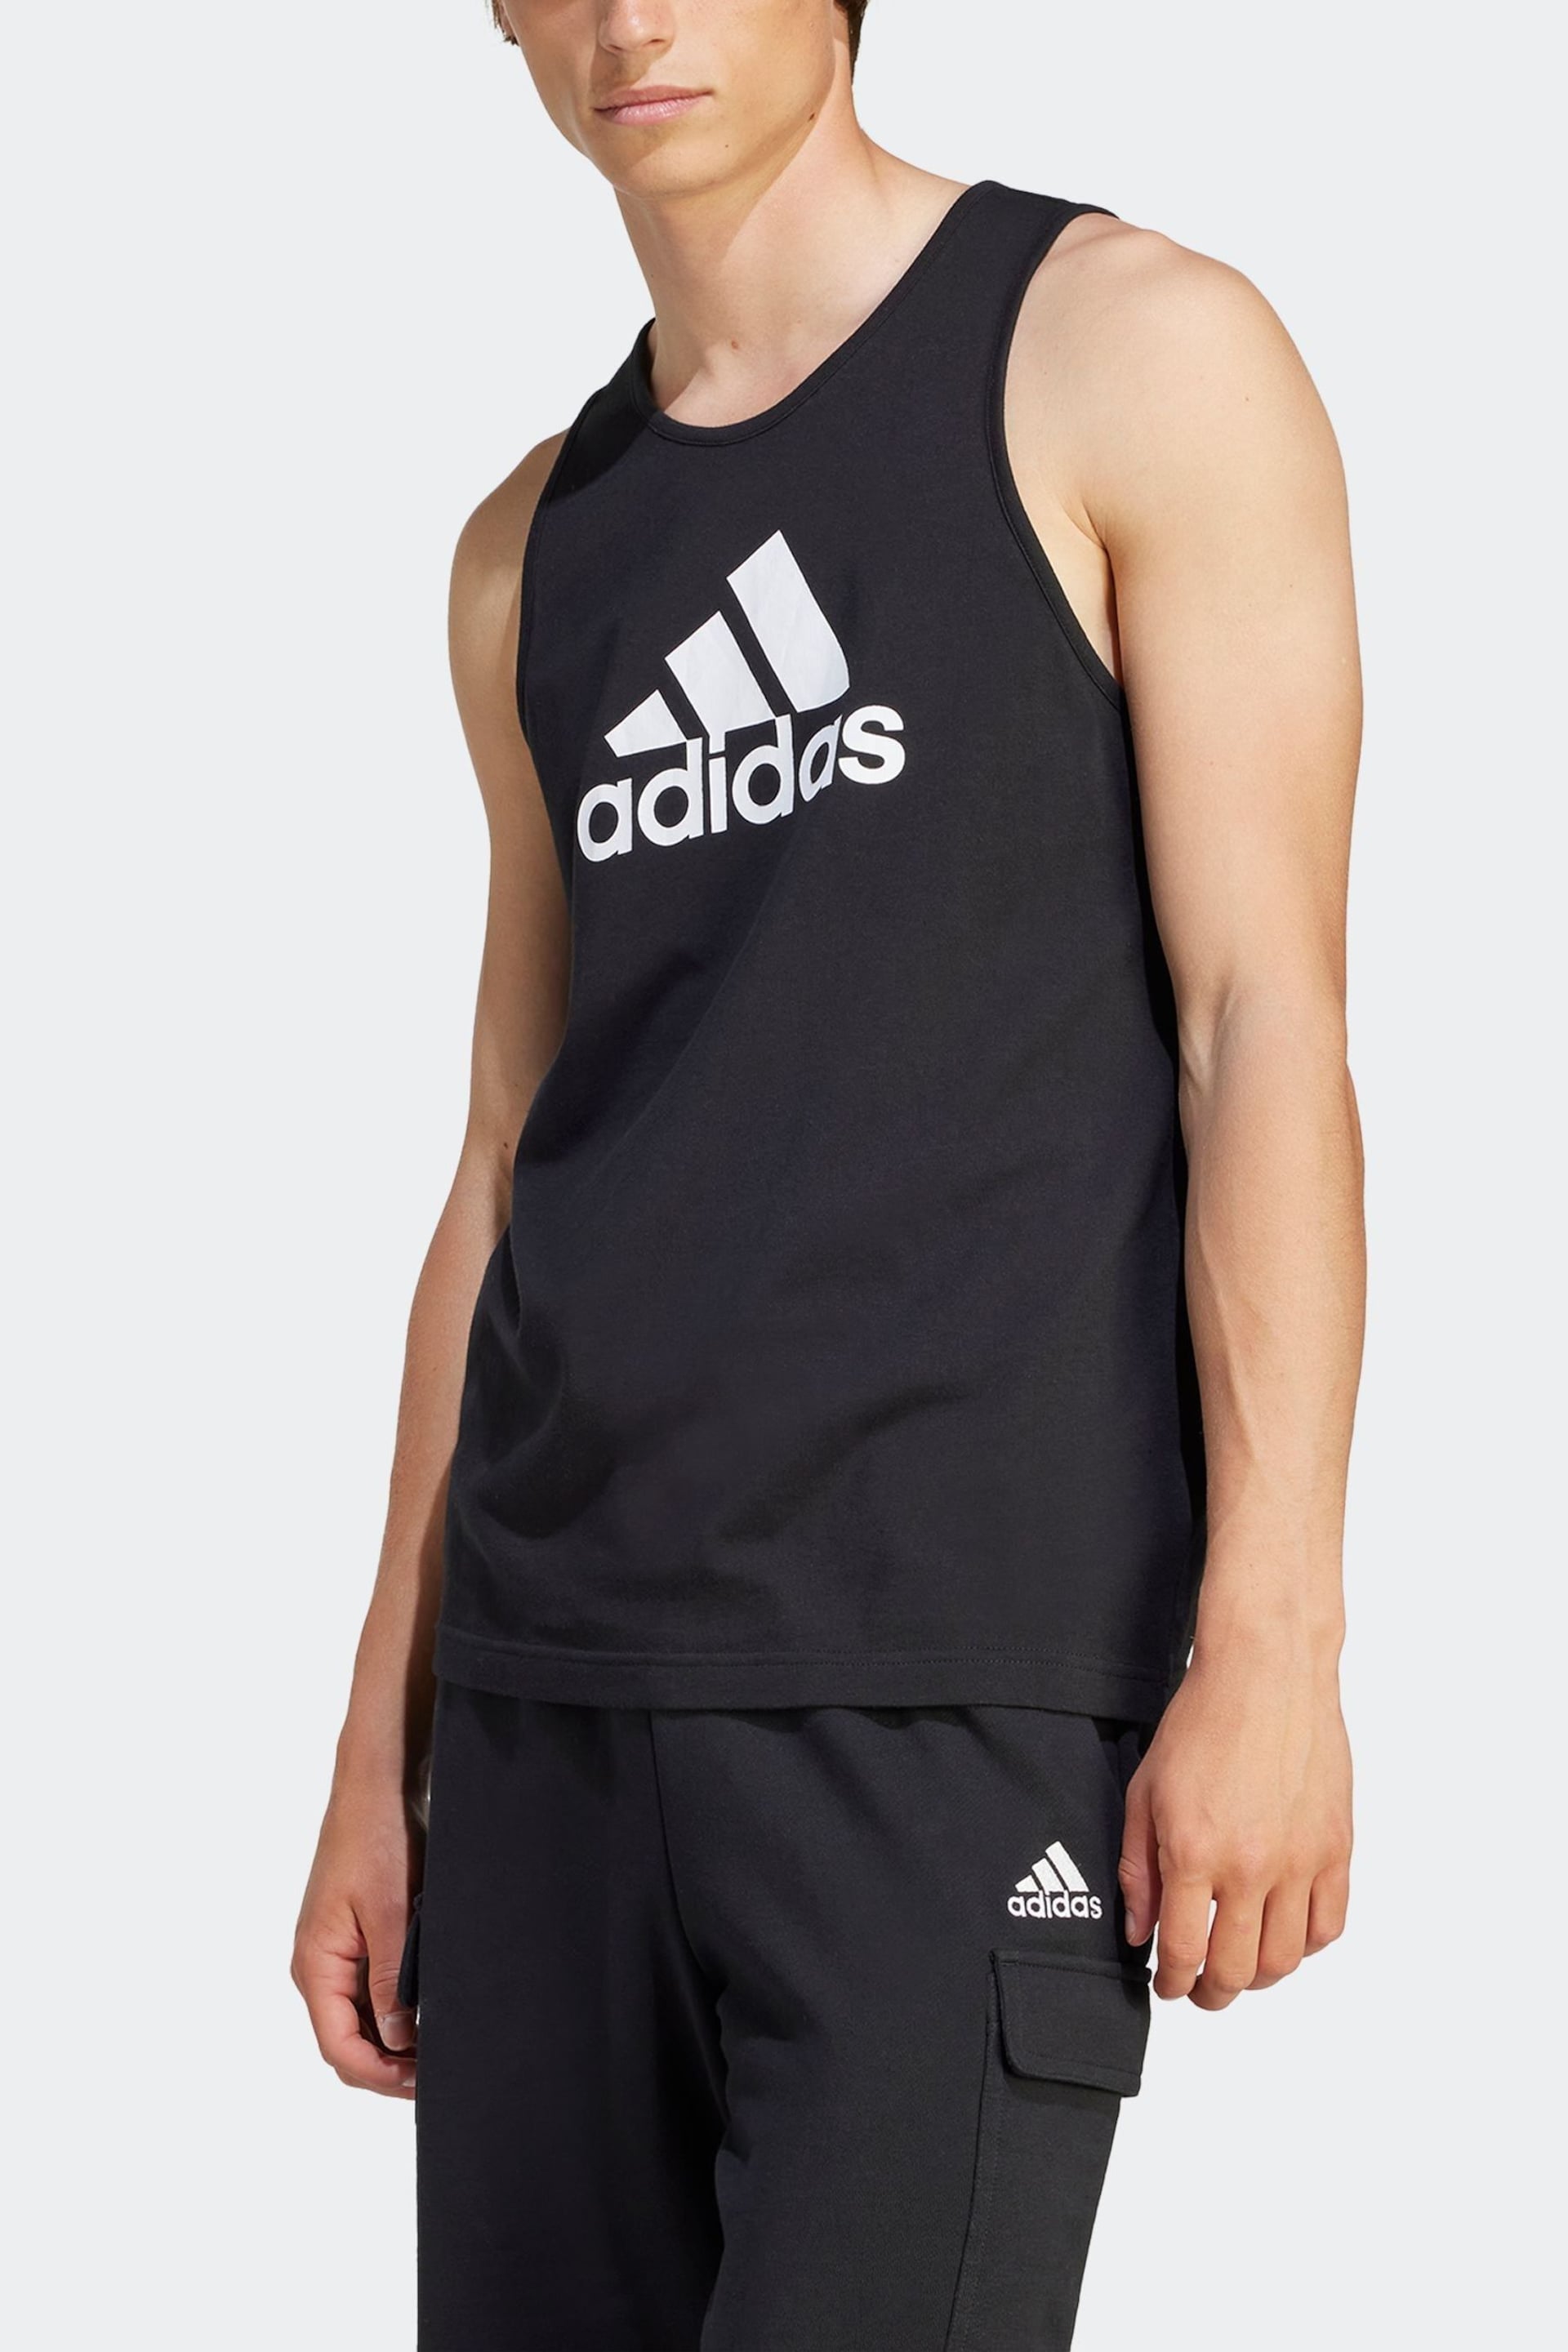 adidas Black/White Big Logo Vest Top - Image 4 of 7